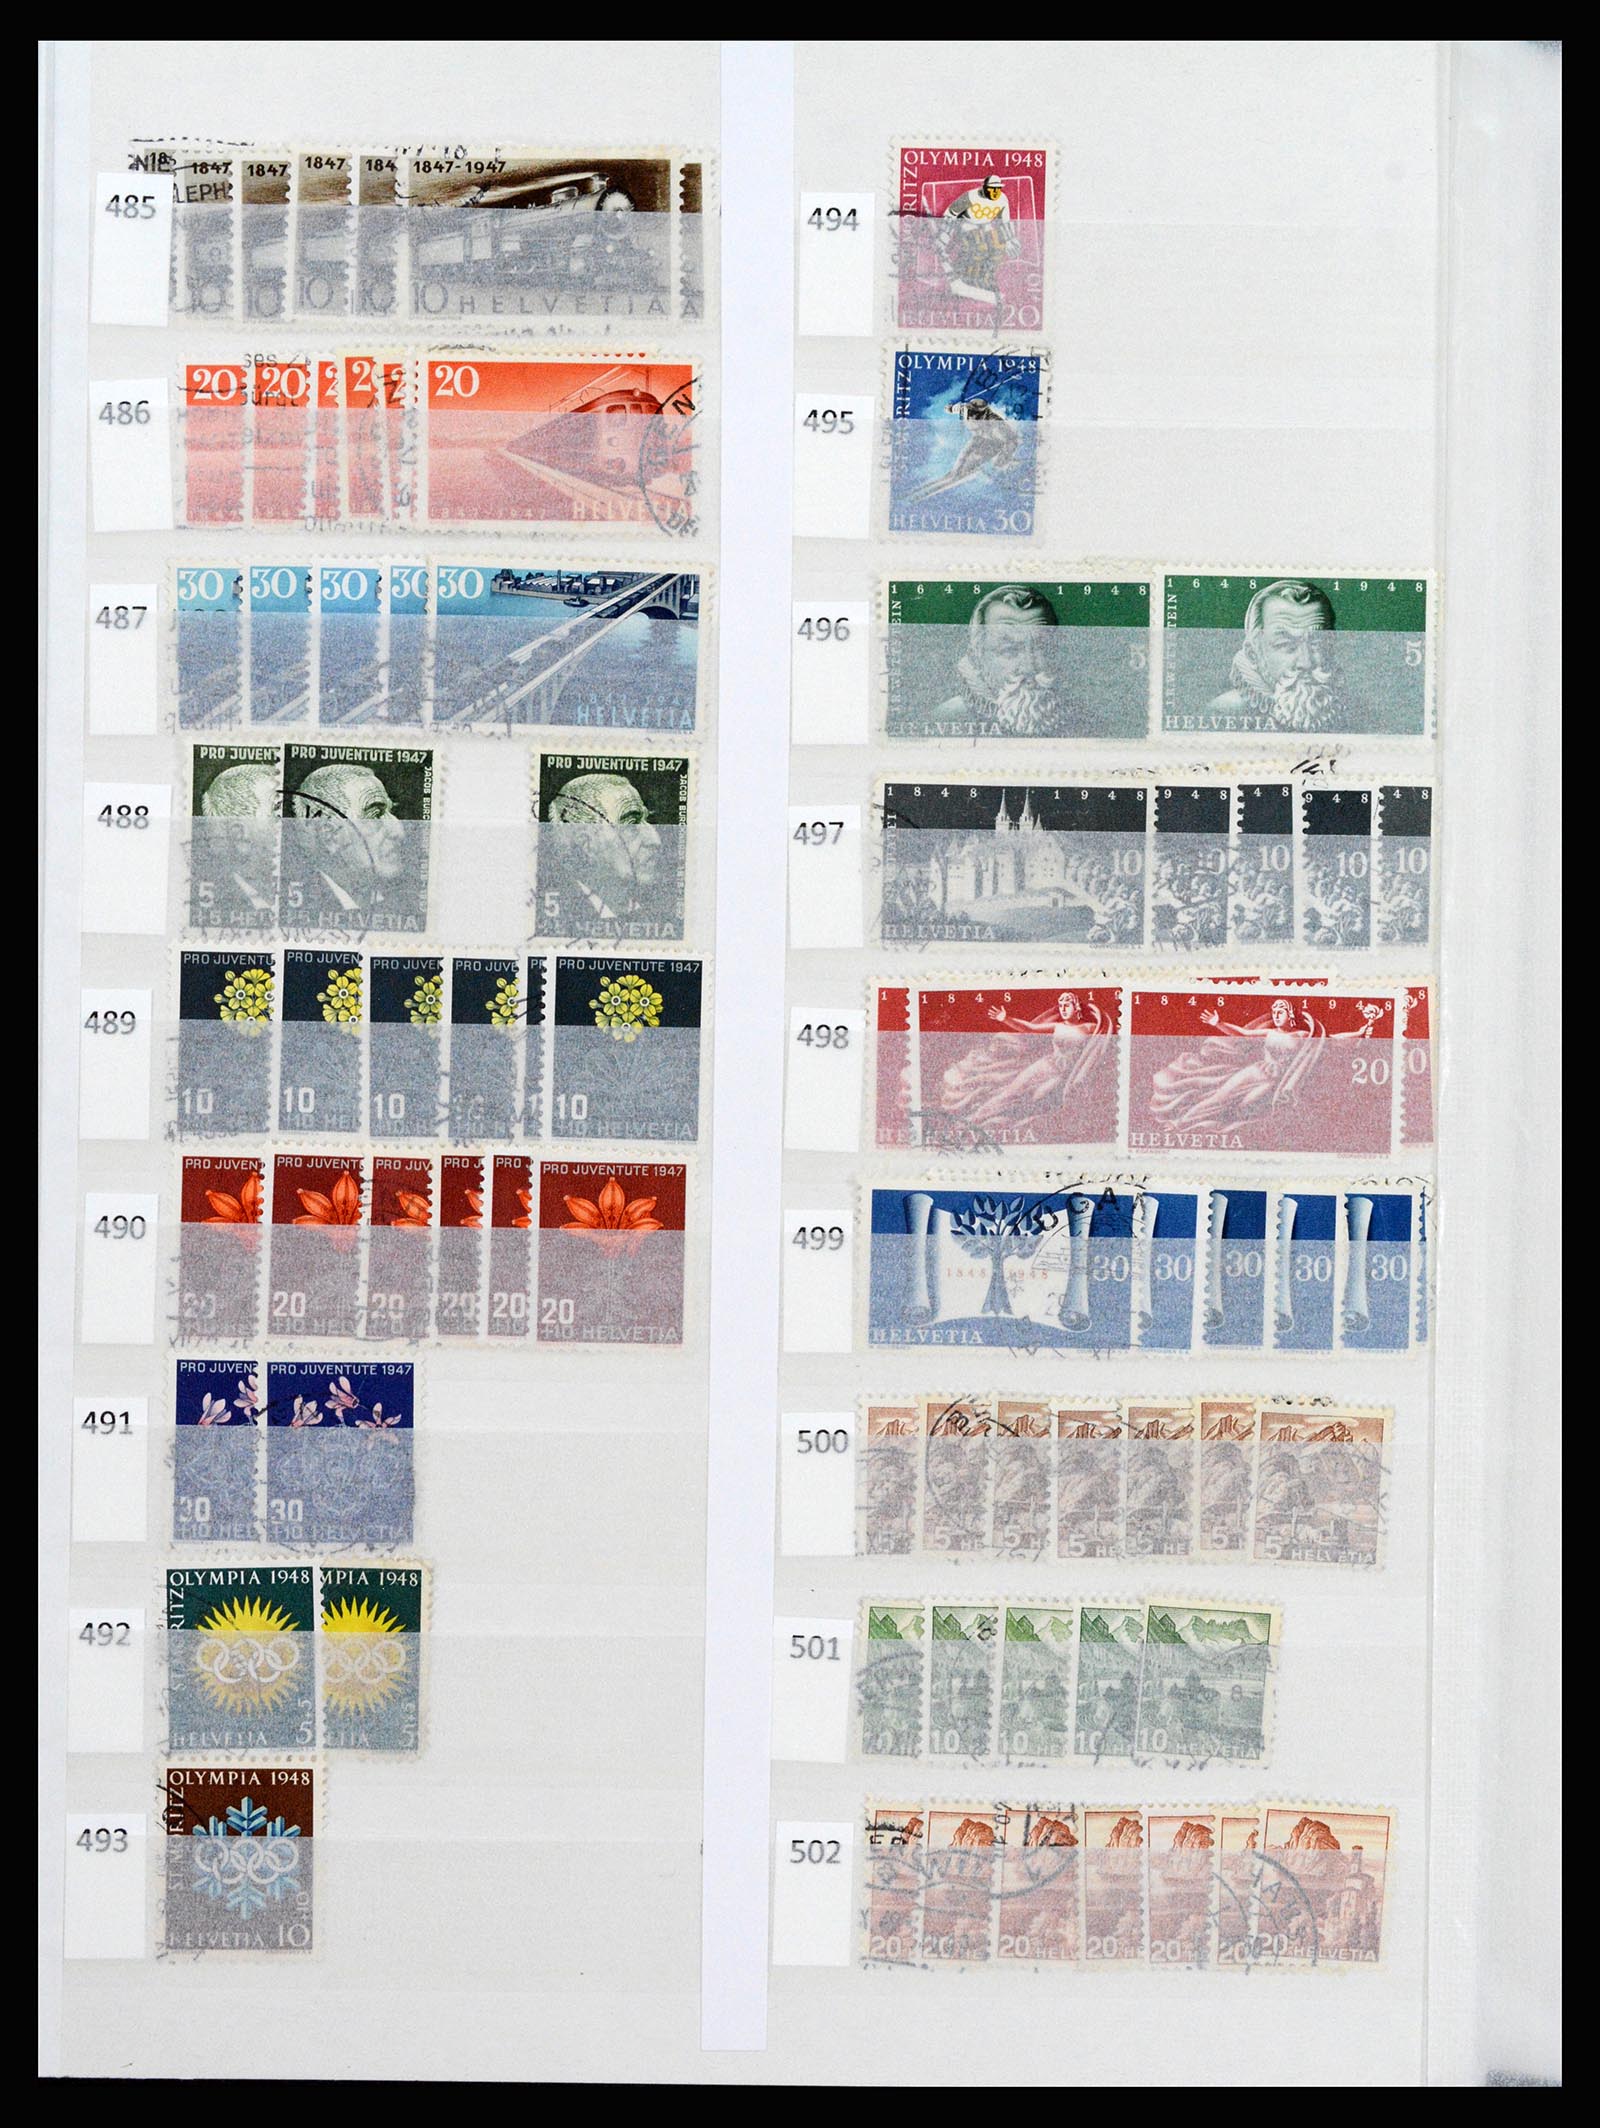 37252 024 - Stamp collection 37252 Switzerland 1900-2011.